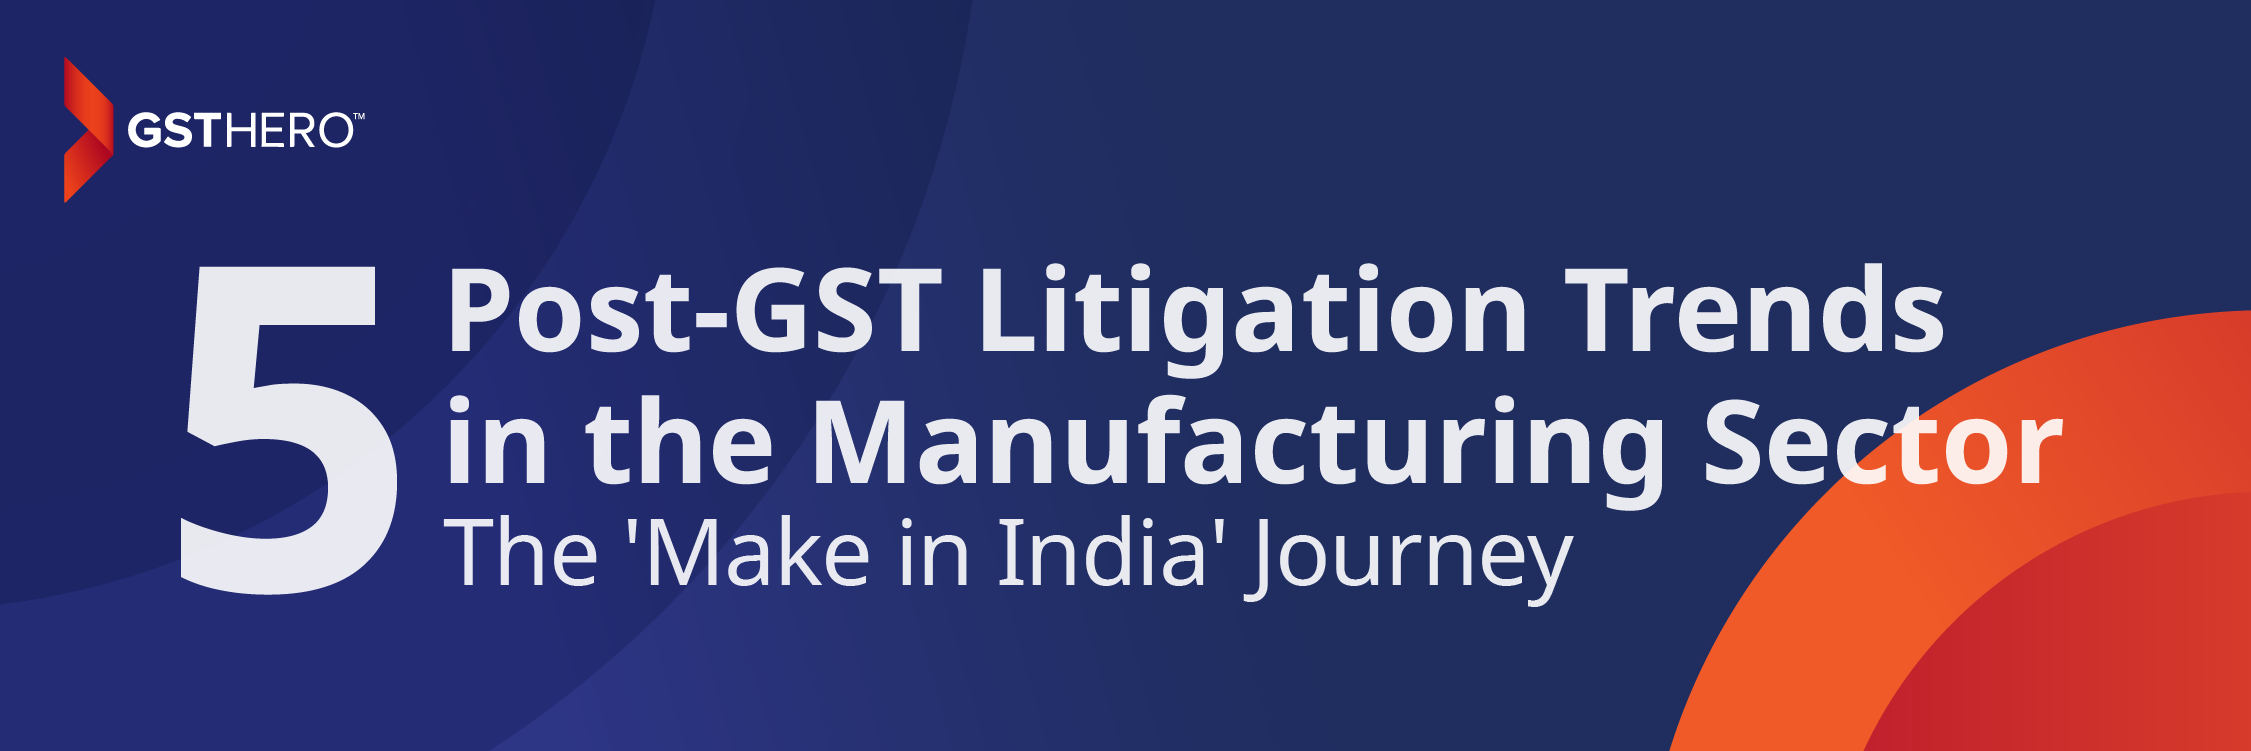 GST Litigation trends